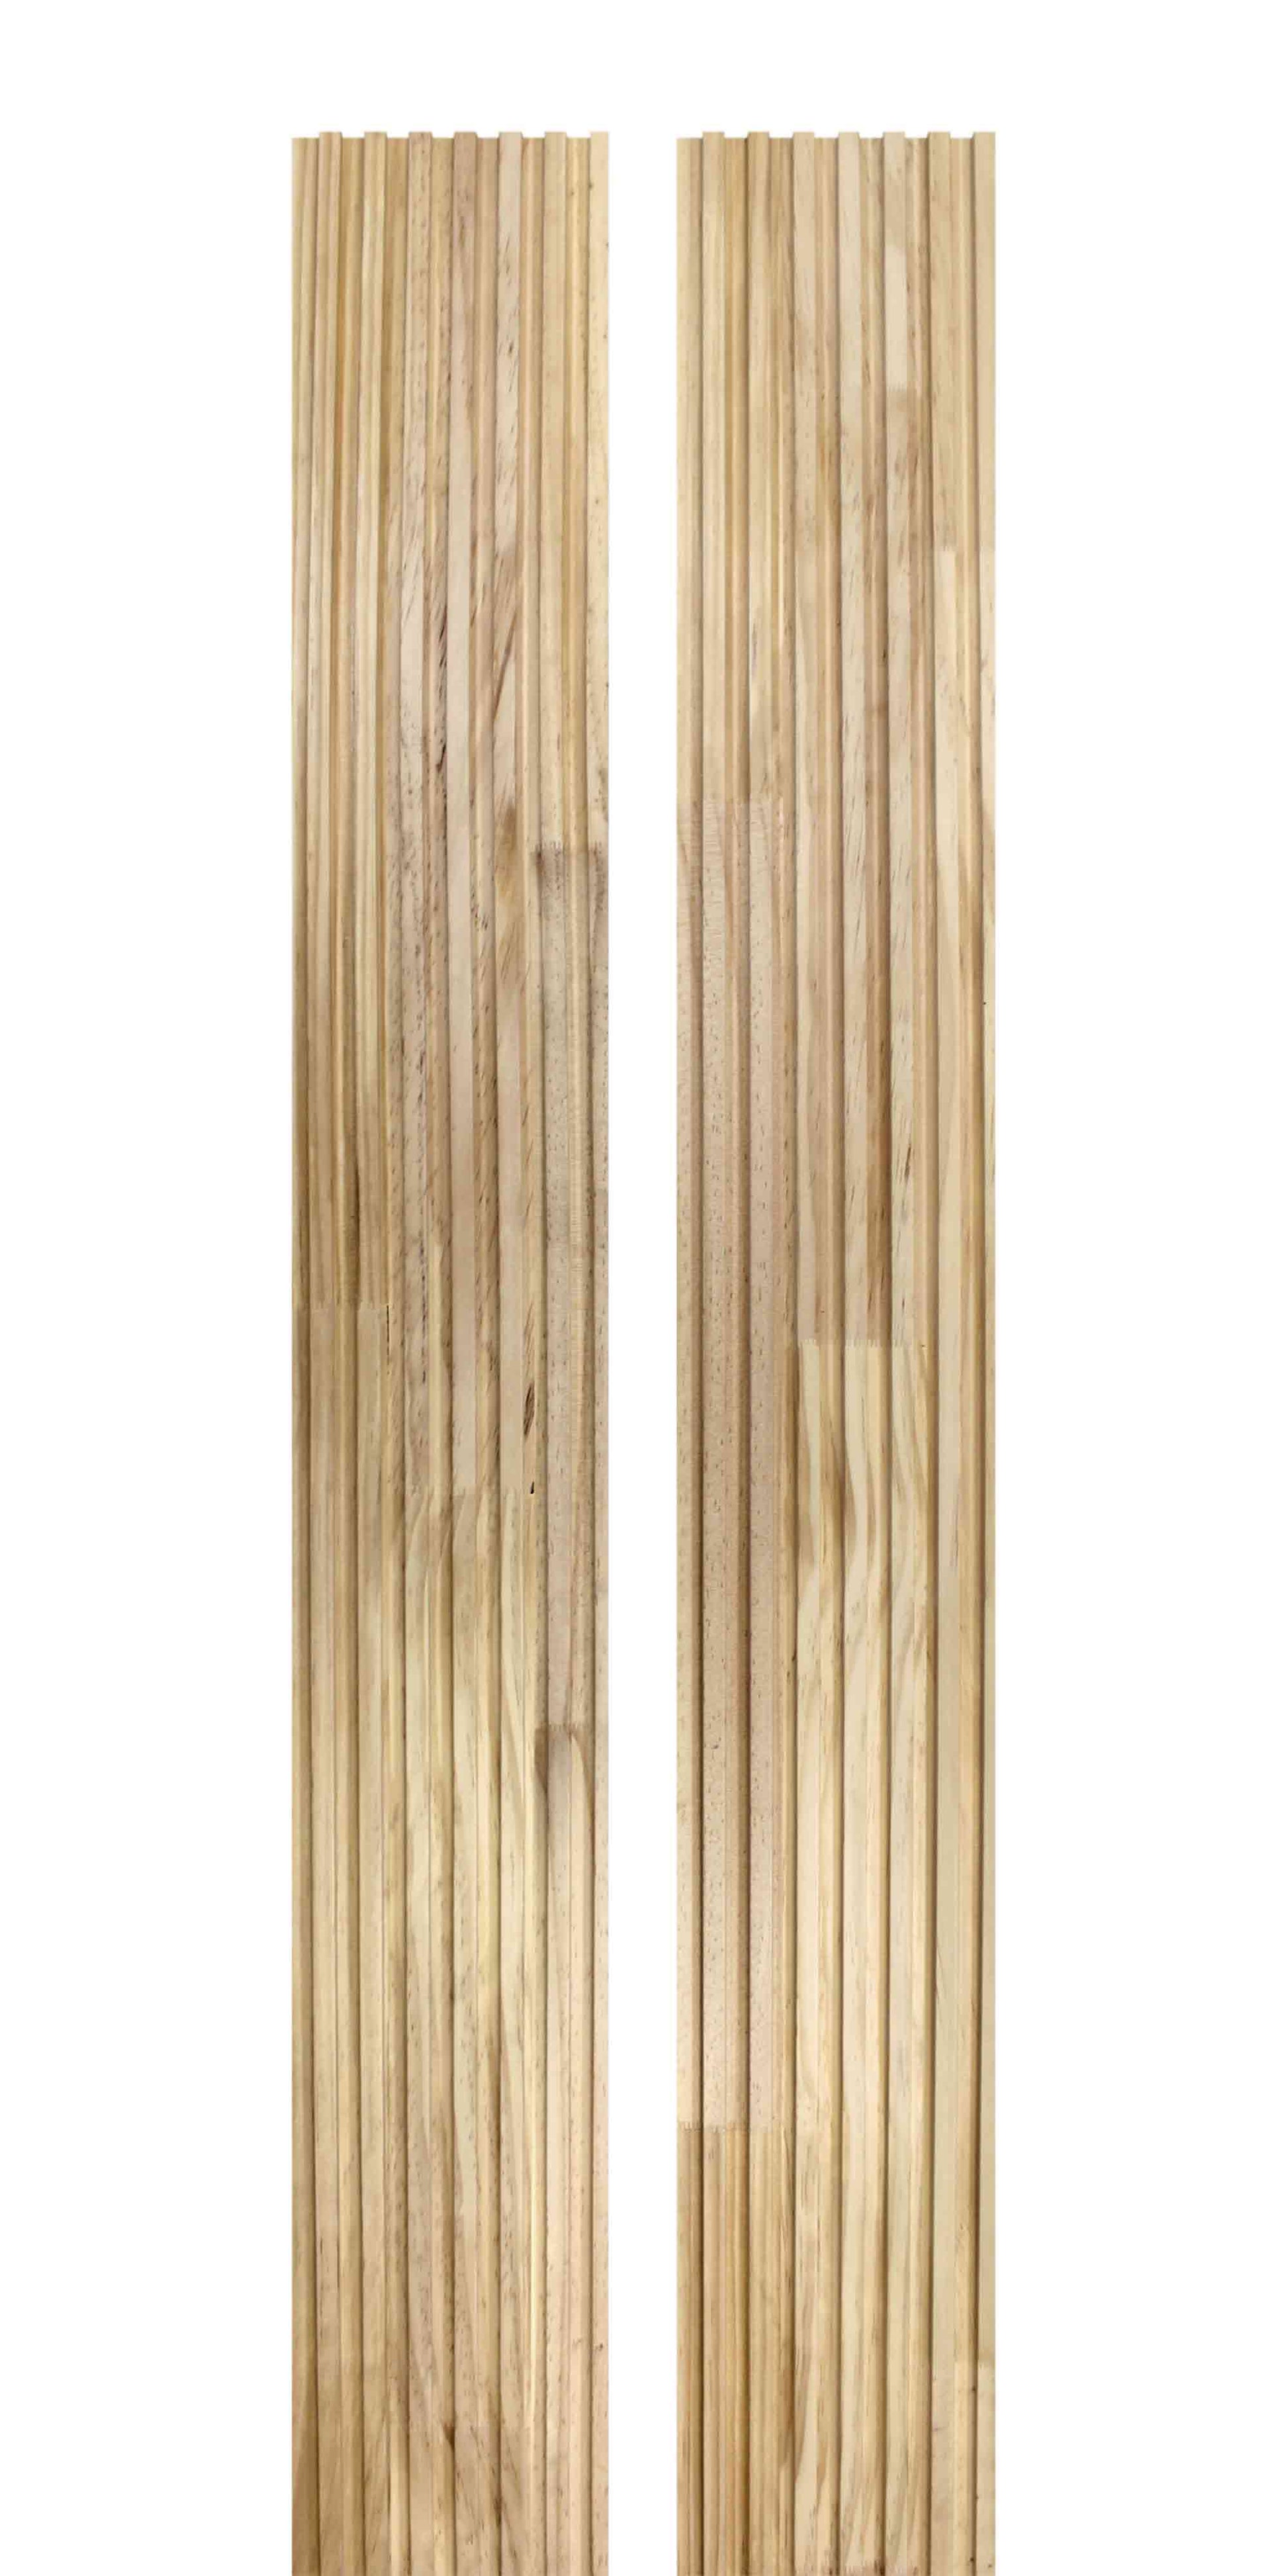 Wooden Craft Sticks 6”, Unfinished